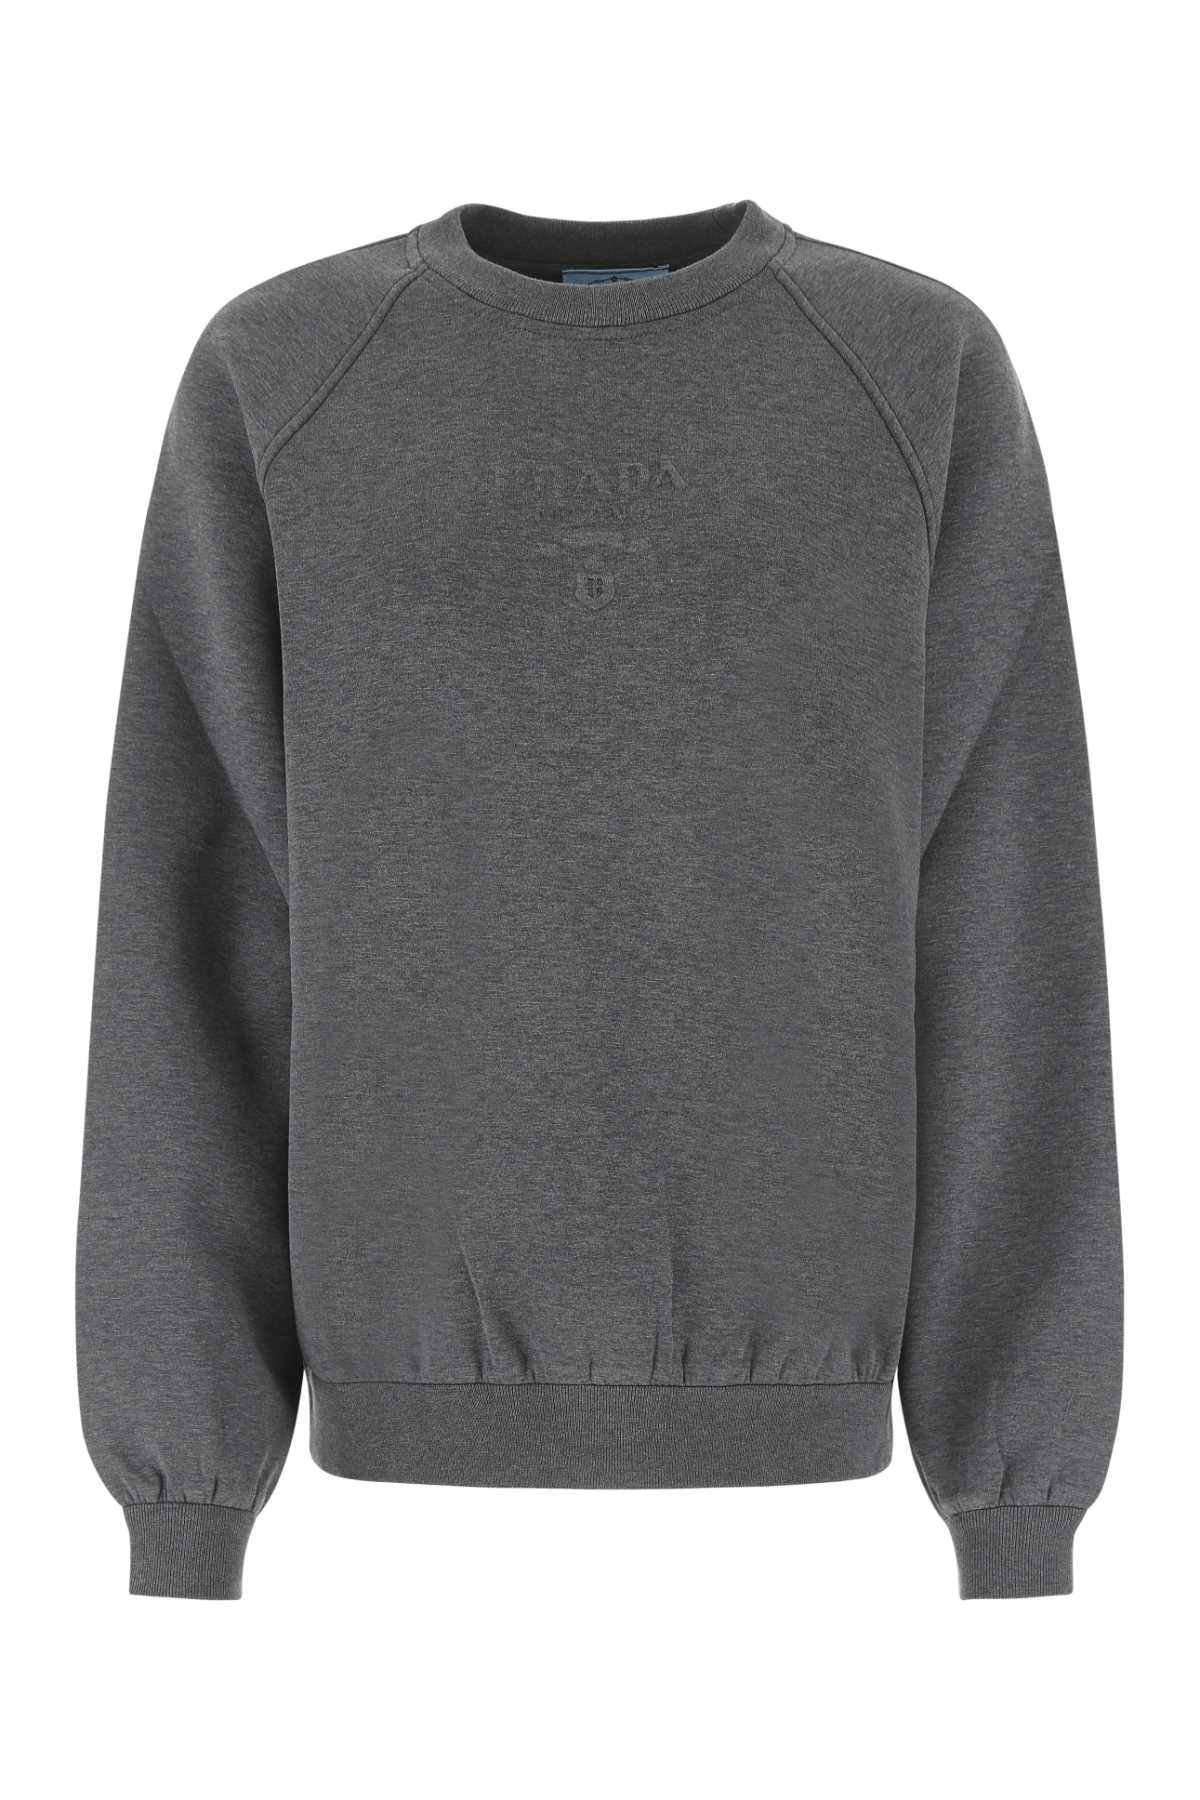 Prada Grey Cotton Blend Oversize Sweatshirt In F0480